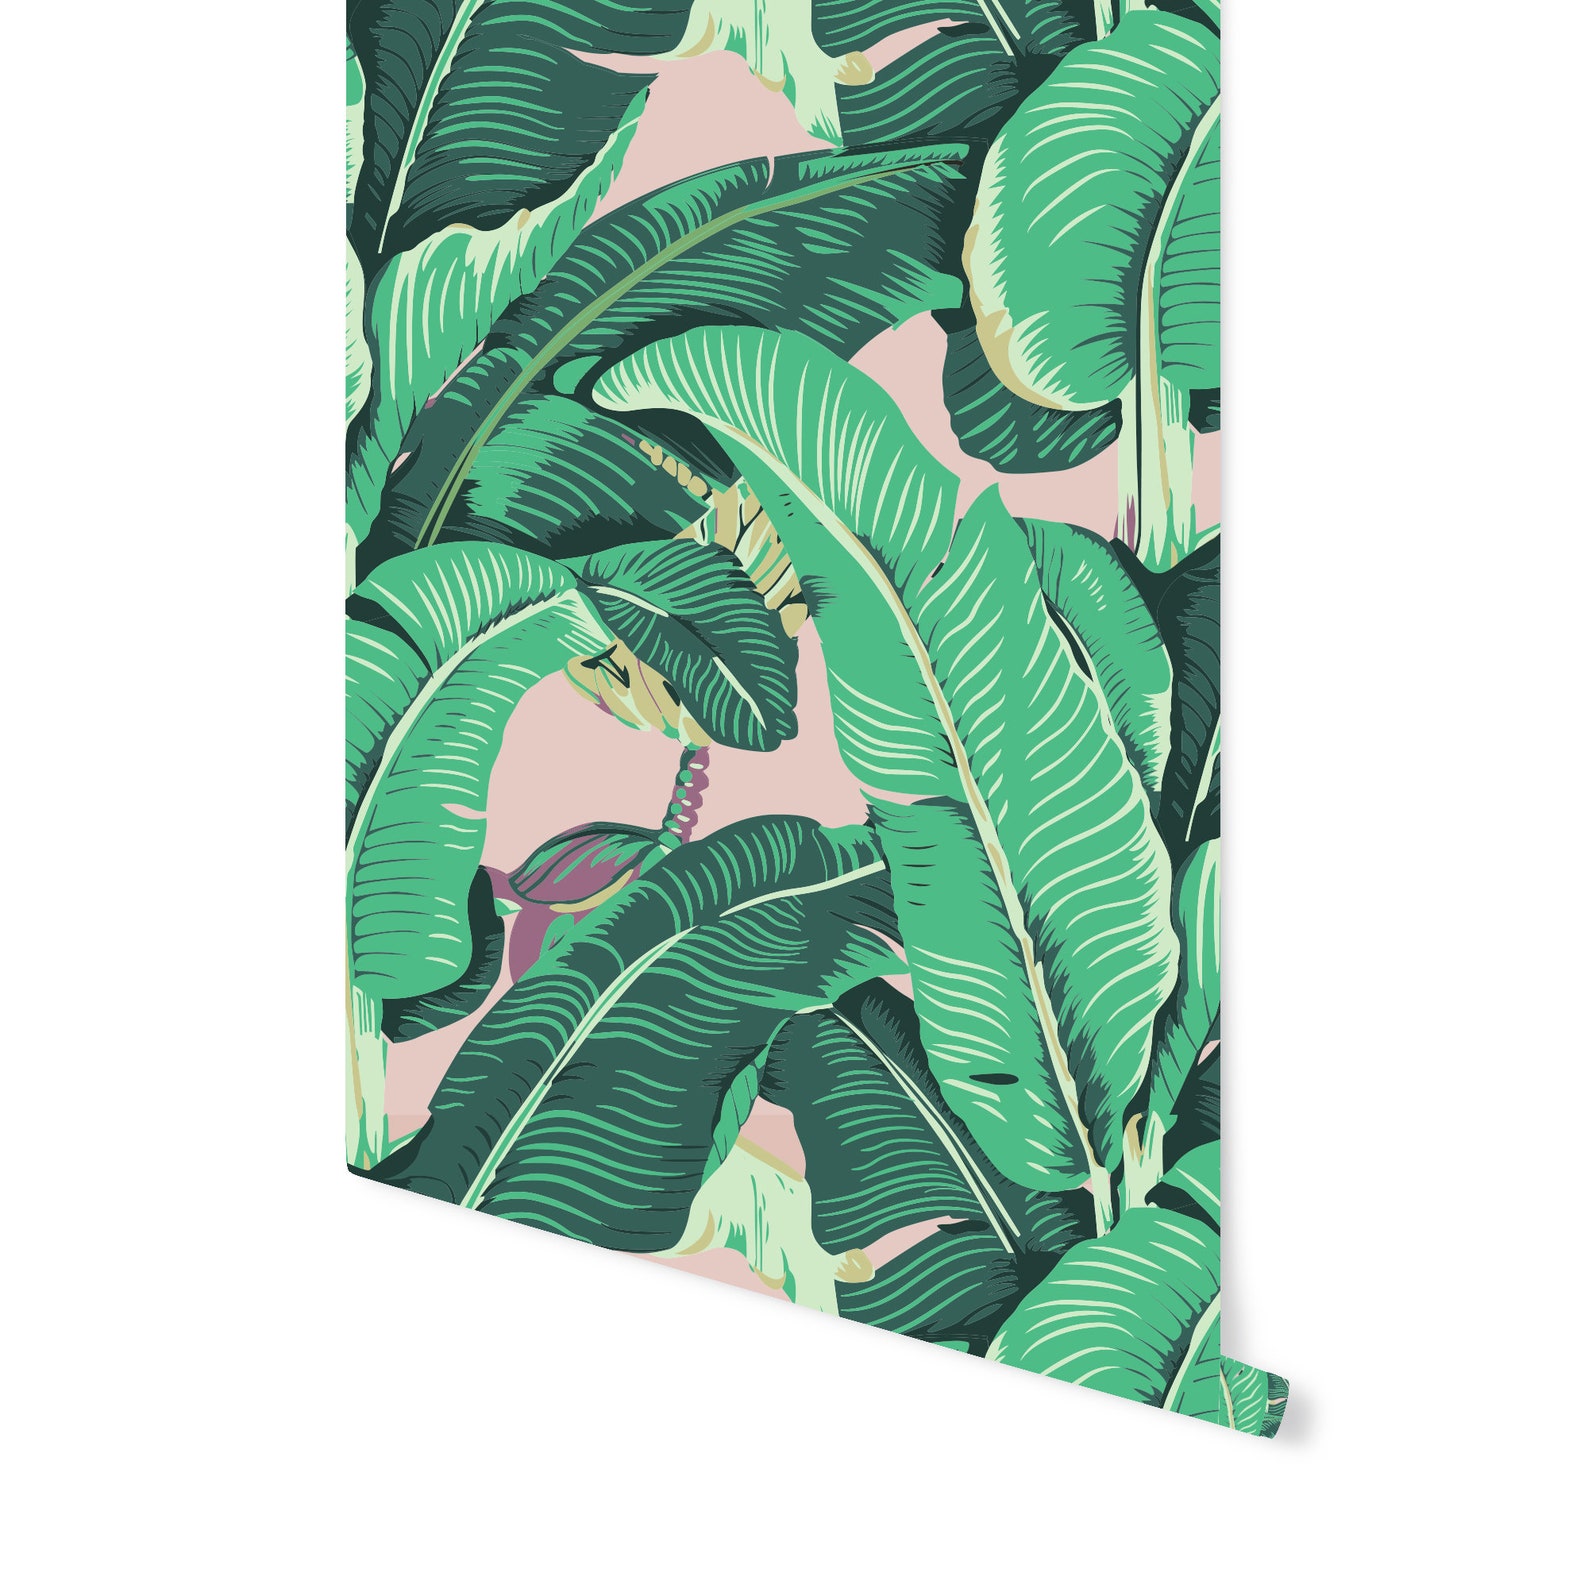 Banana Leaf Removable Wallpaper Tropical Simply Peel n | Etsy